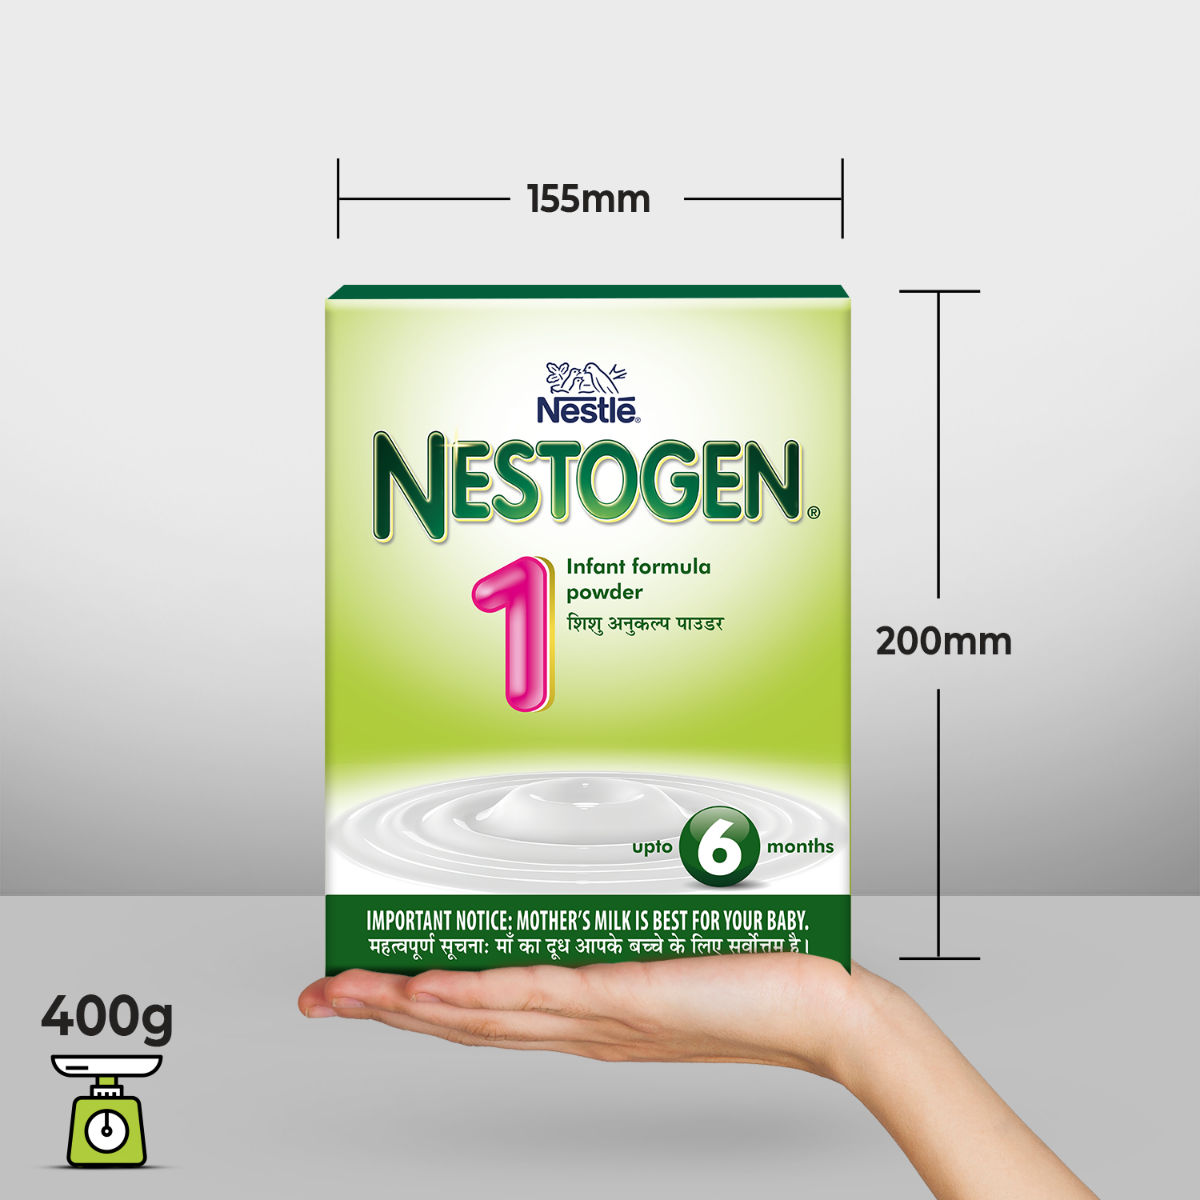 Nestle Nestogen Infant Formula Stage 1 (Up to 6 Months) Powder, 400 gm Refill Pack, Pack of 1 